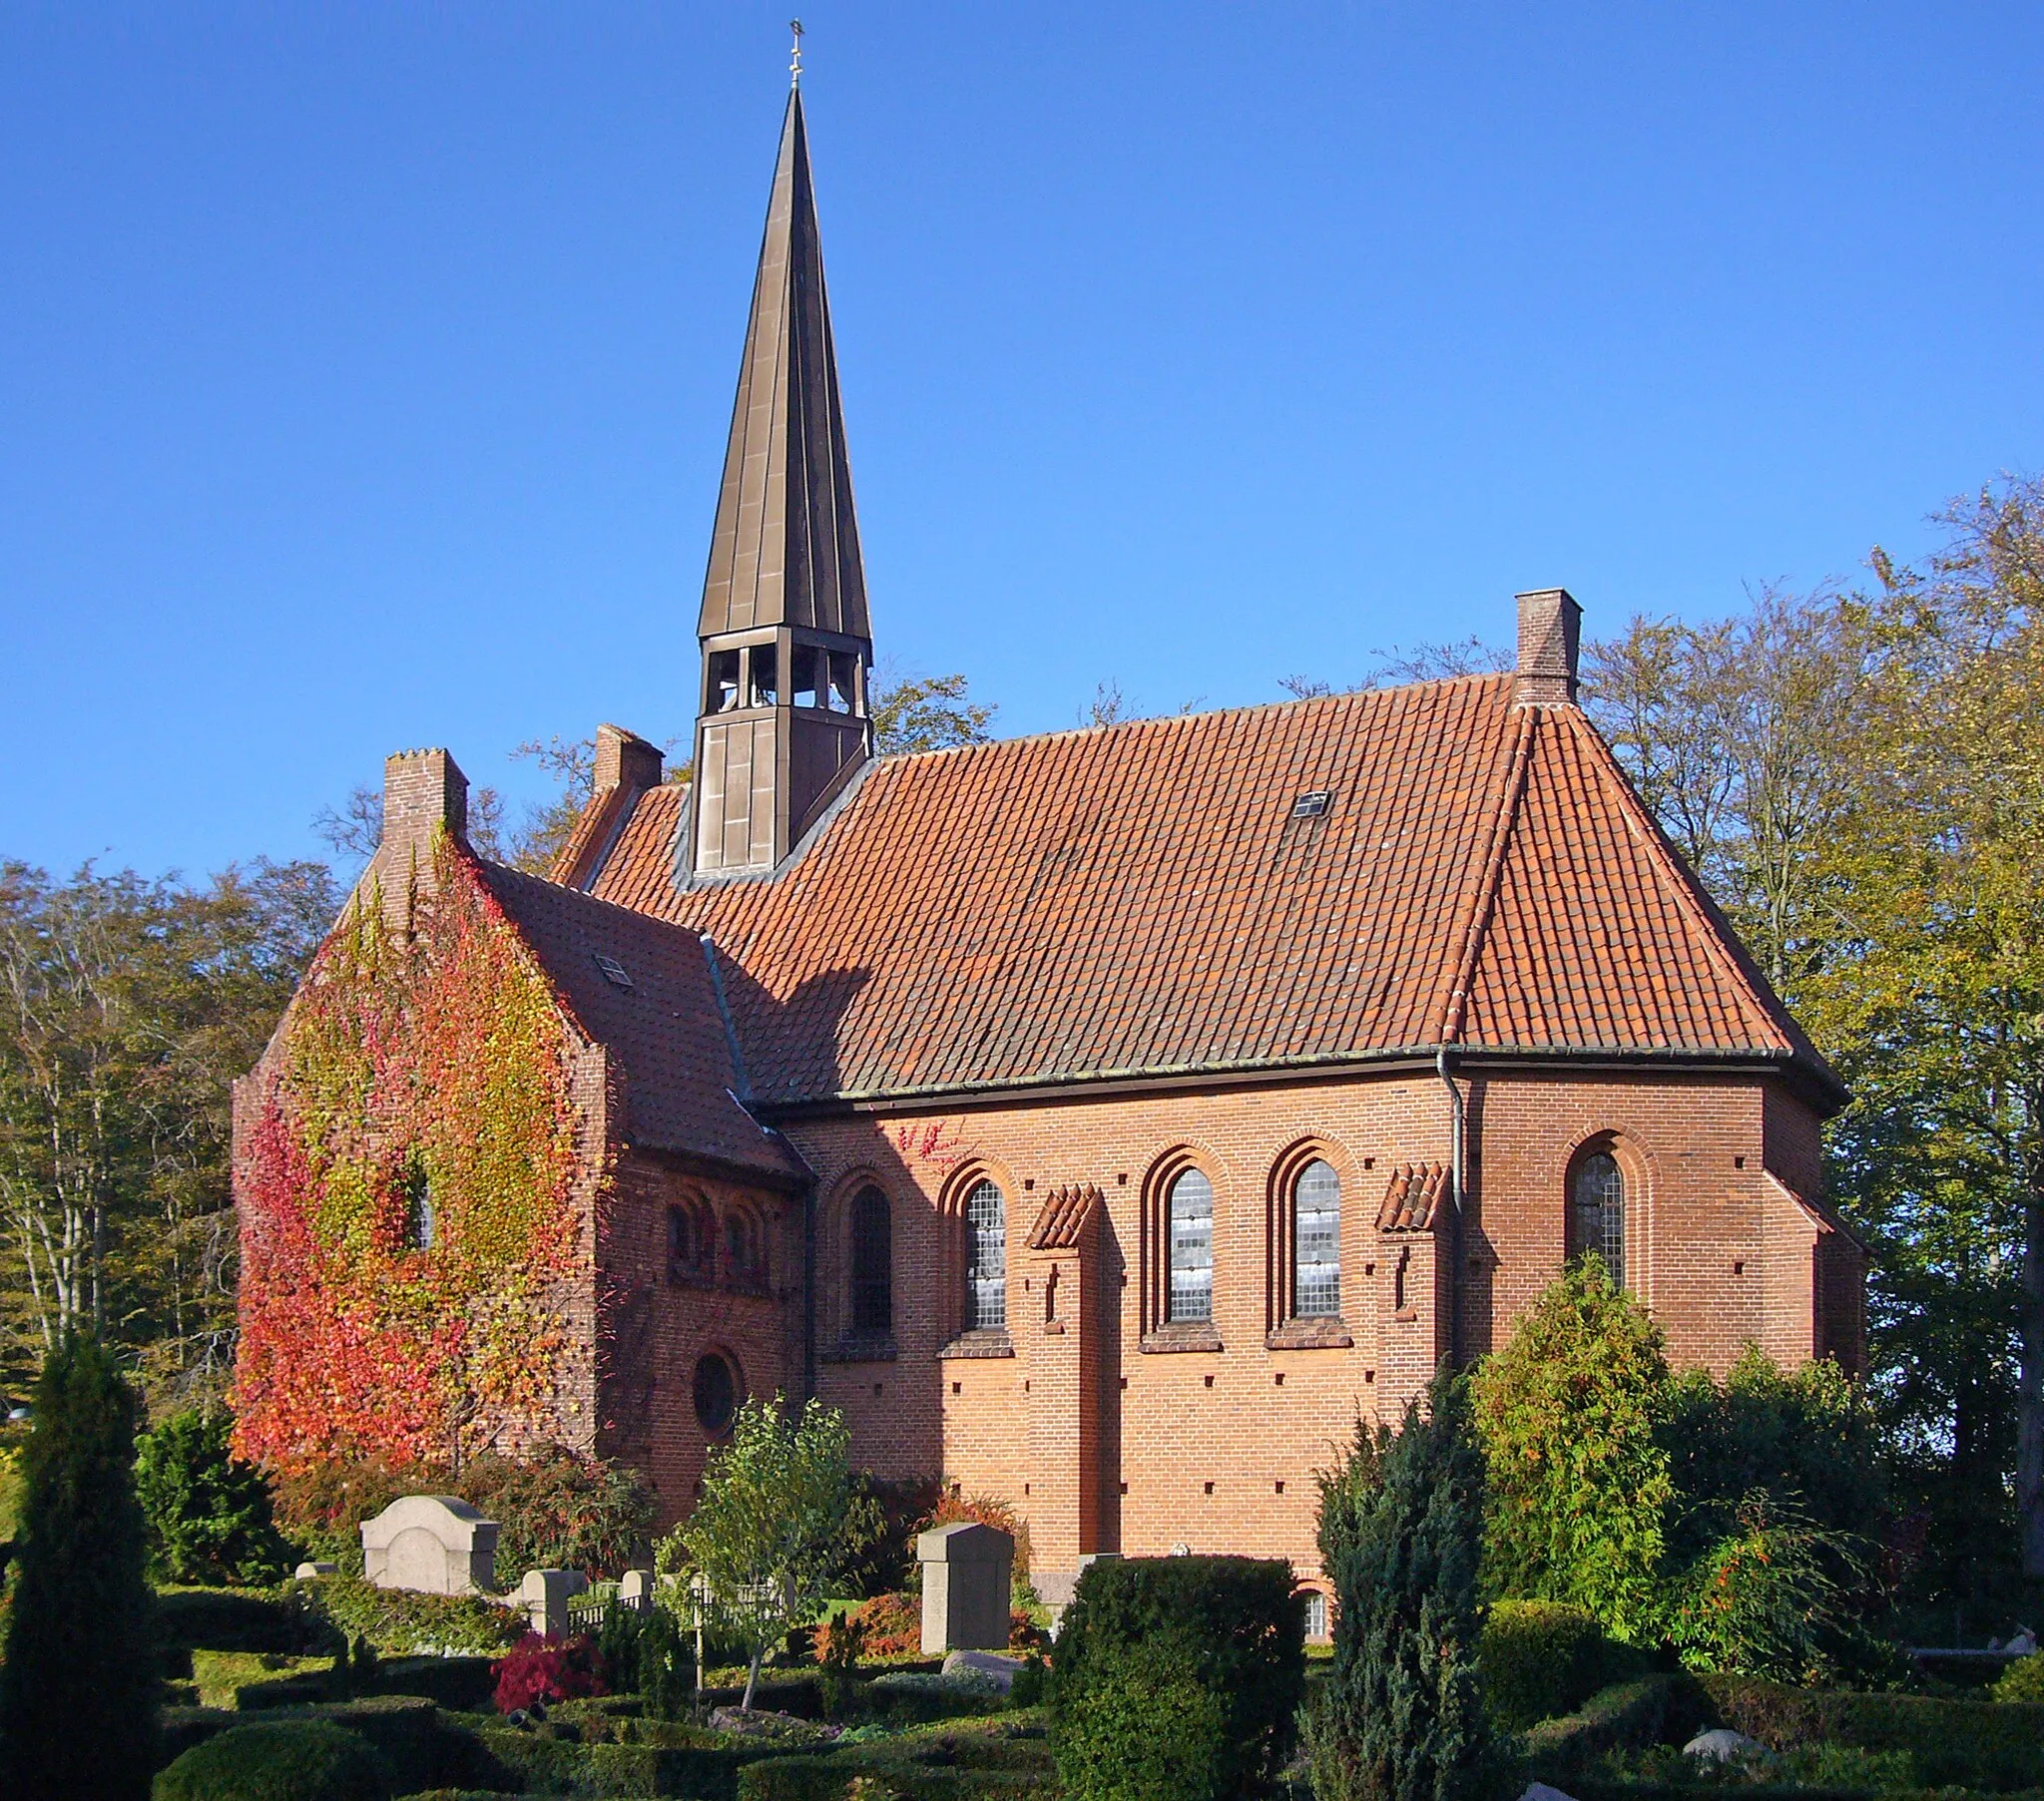 Photo showing: Vor Frue Kirke in Vor Frue, Roskilde, Denmark

Exterior